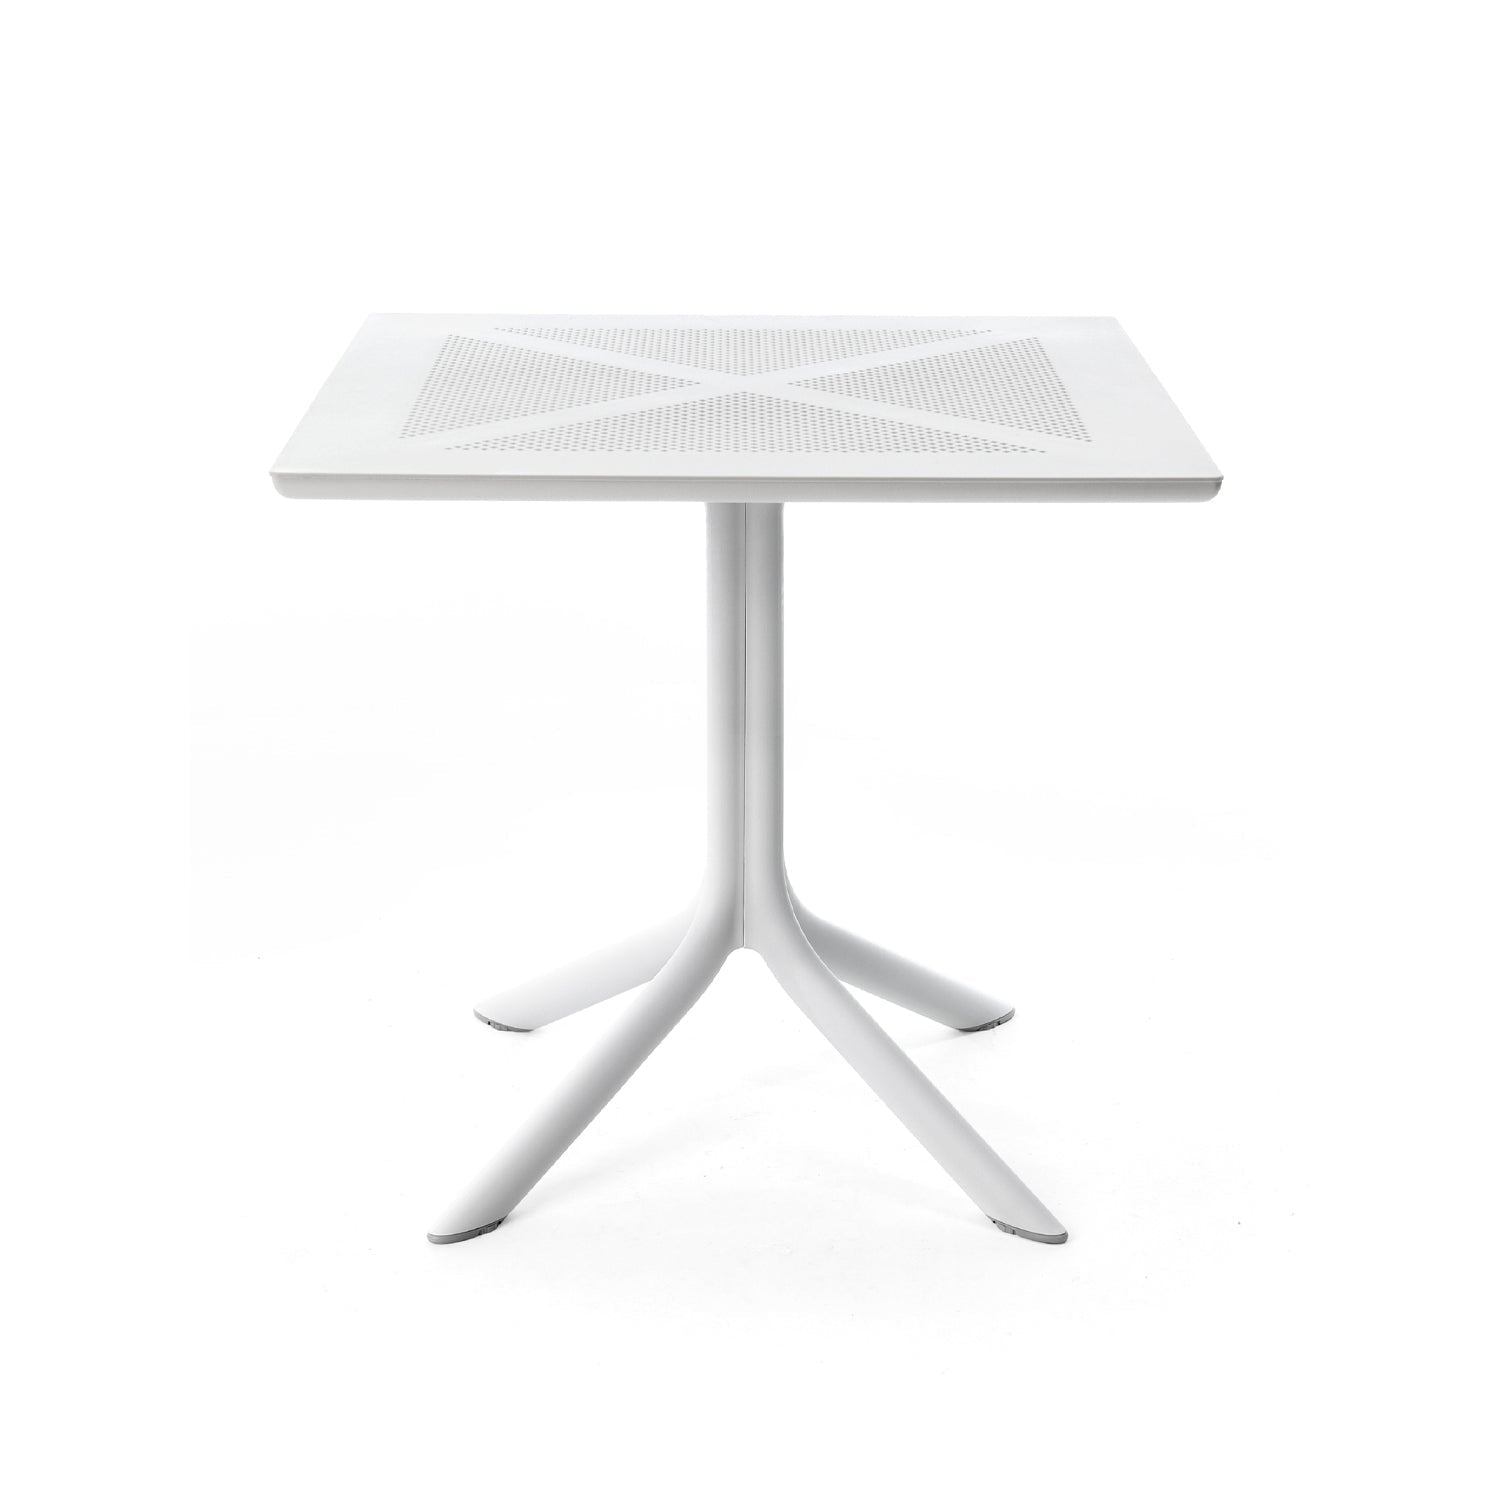 ClipX 80cm Garden Table By Nardi In White